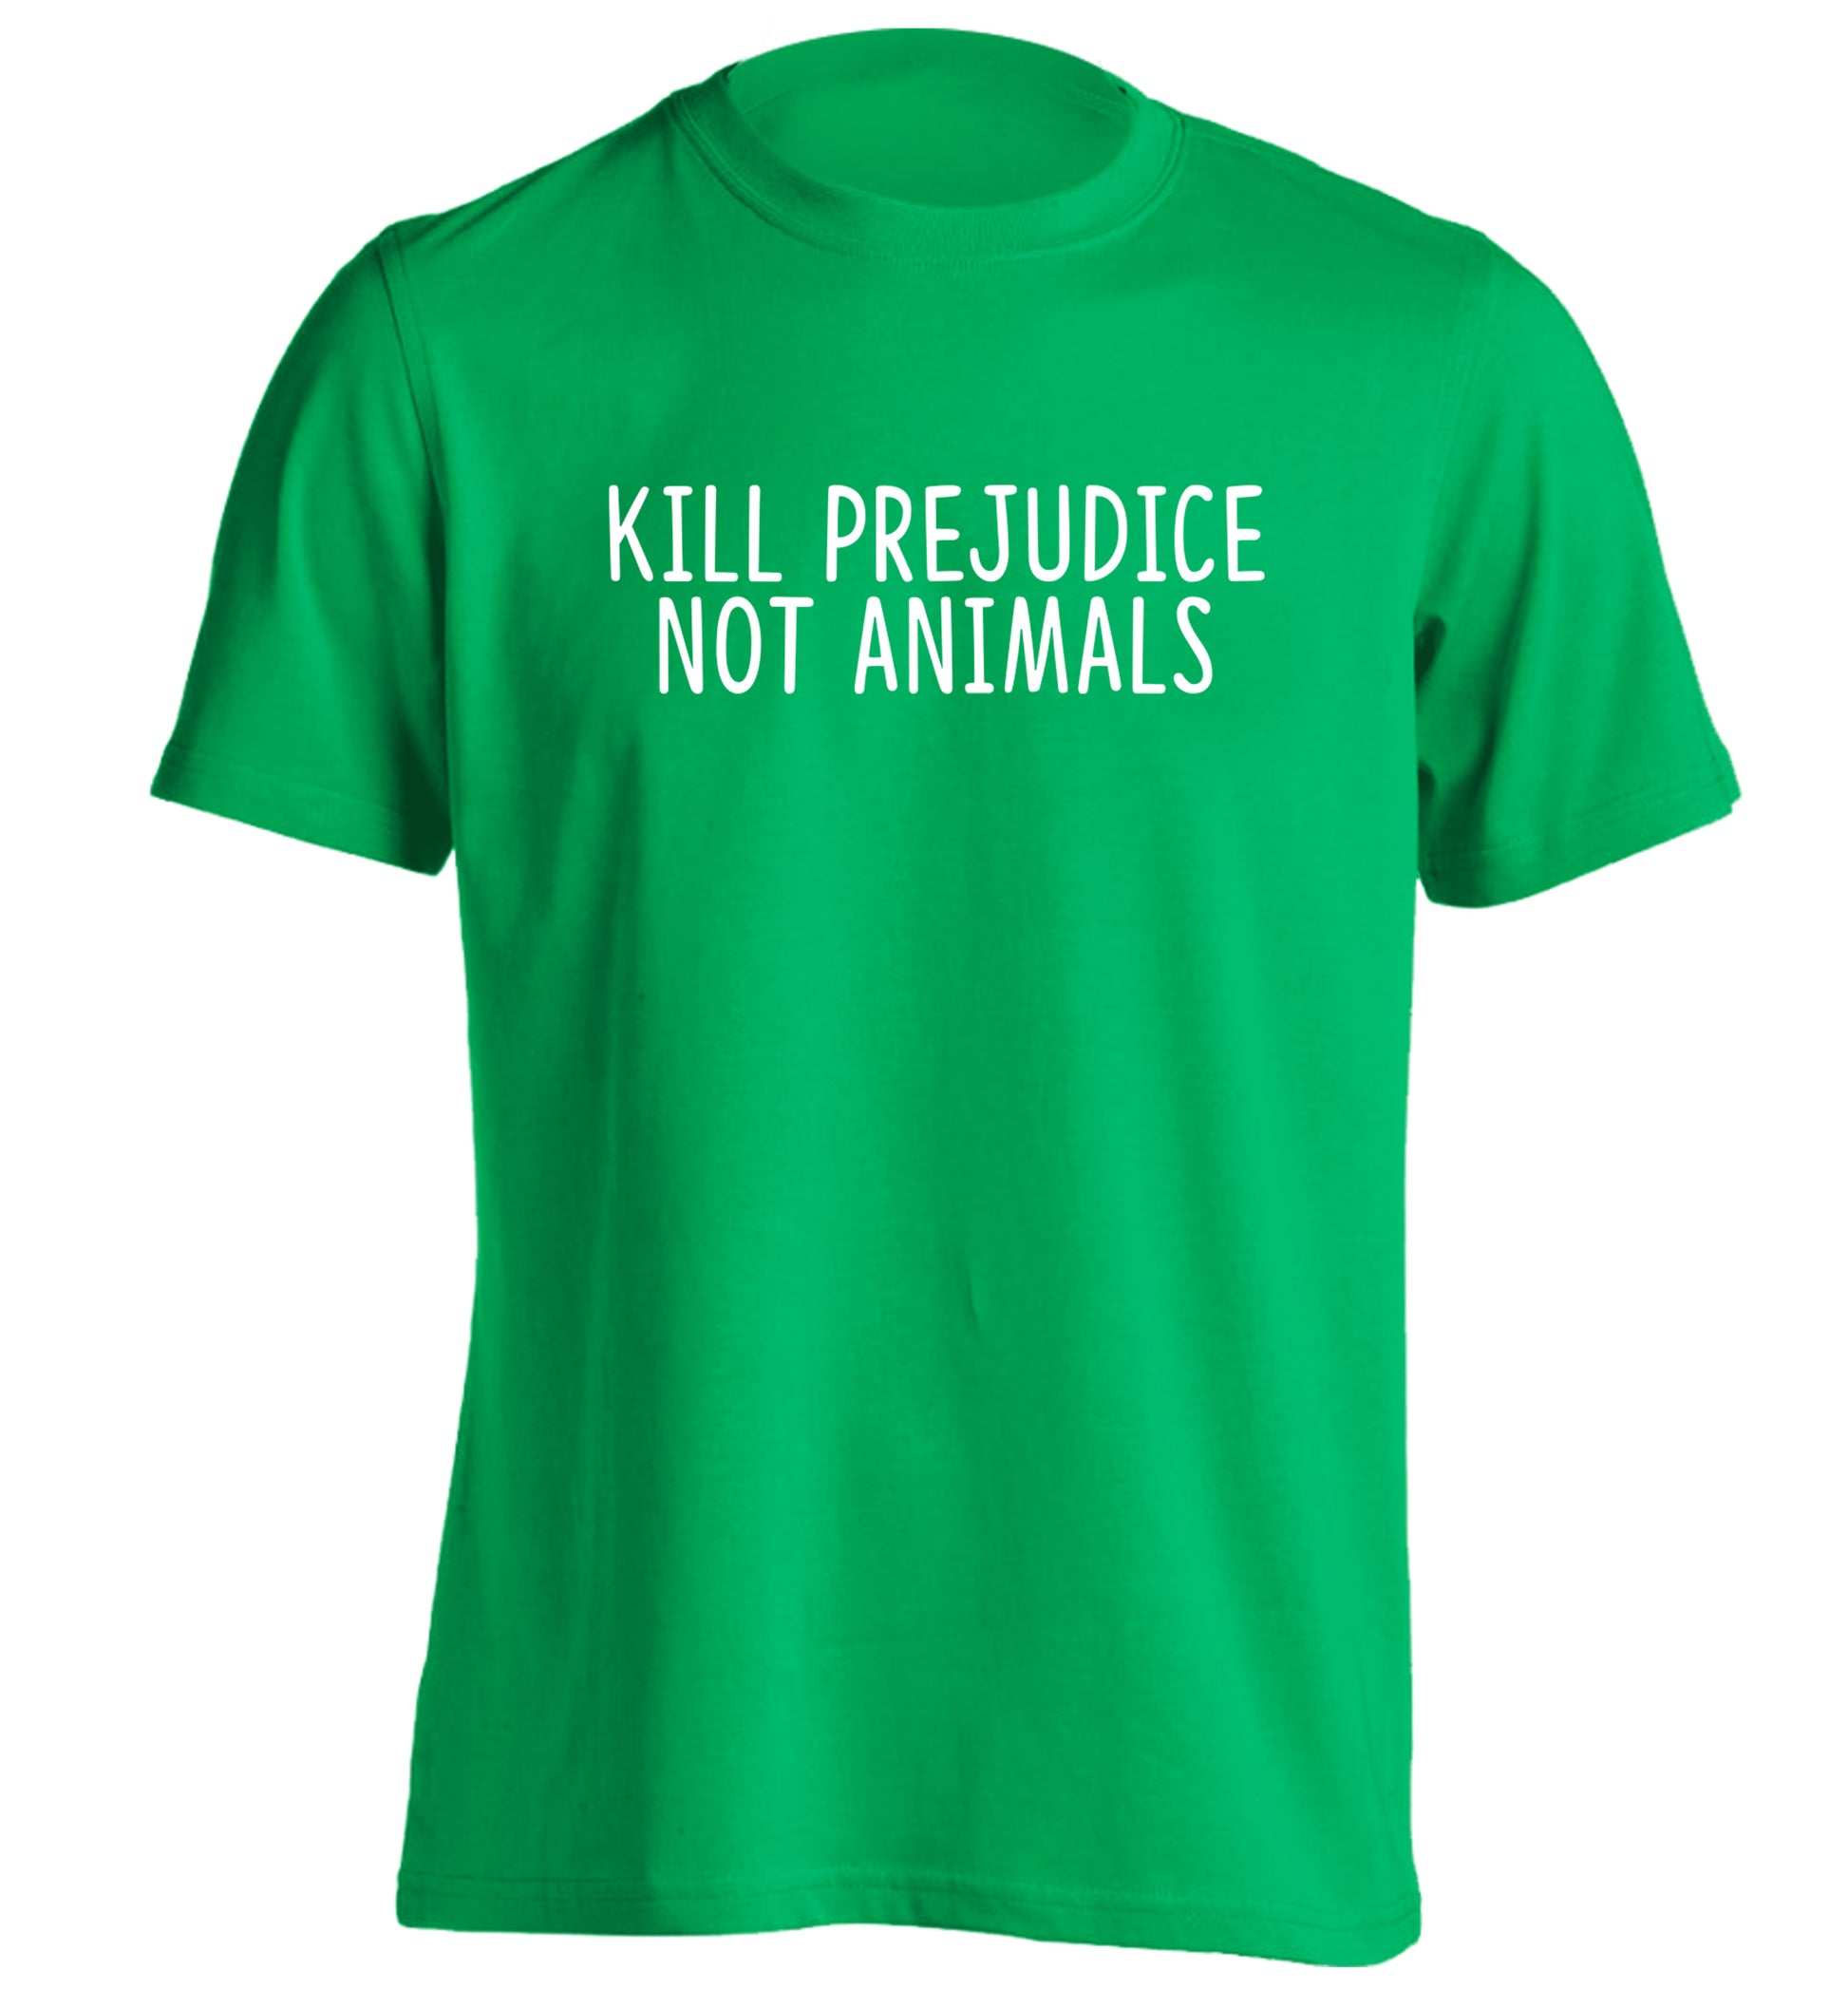 Kill Prejudice Not Animals adults unisex green Tshirt 2XL